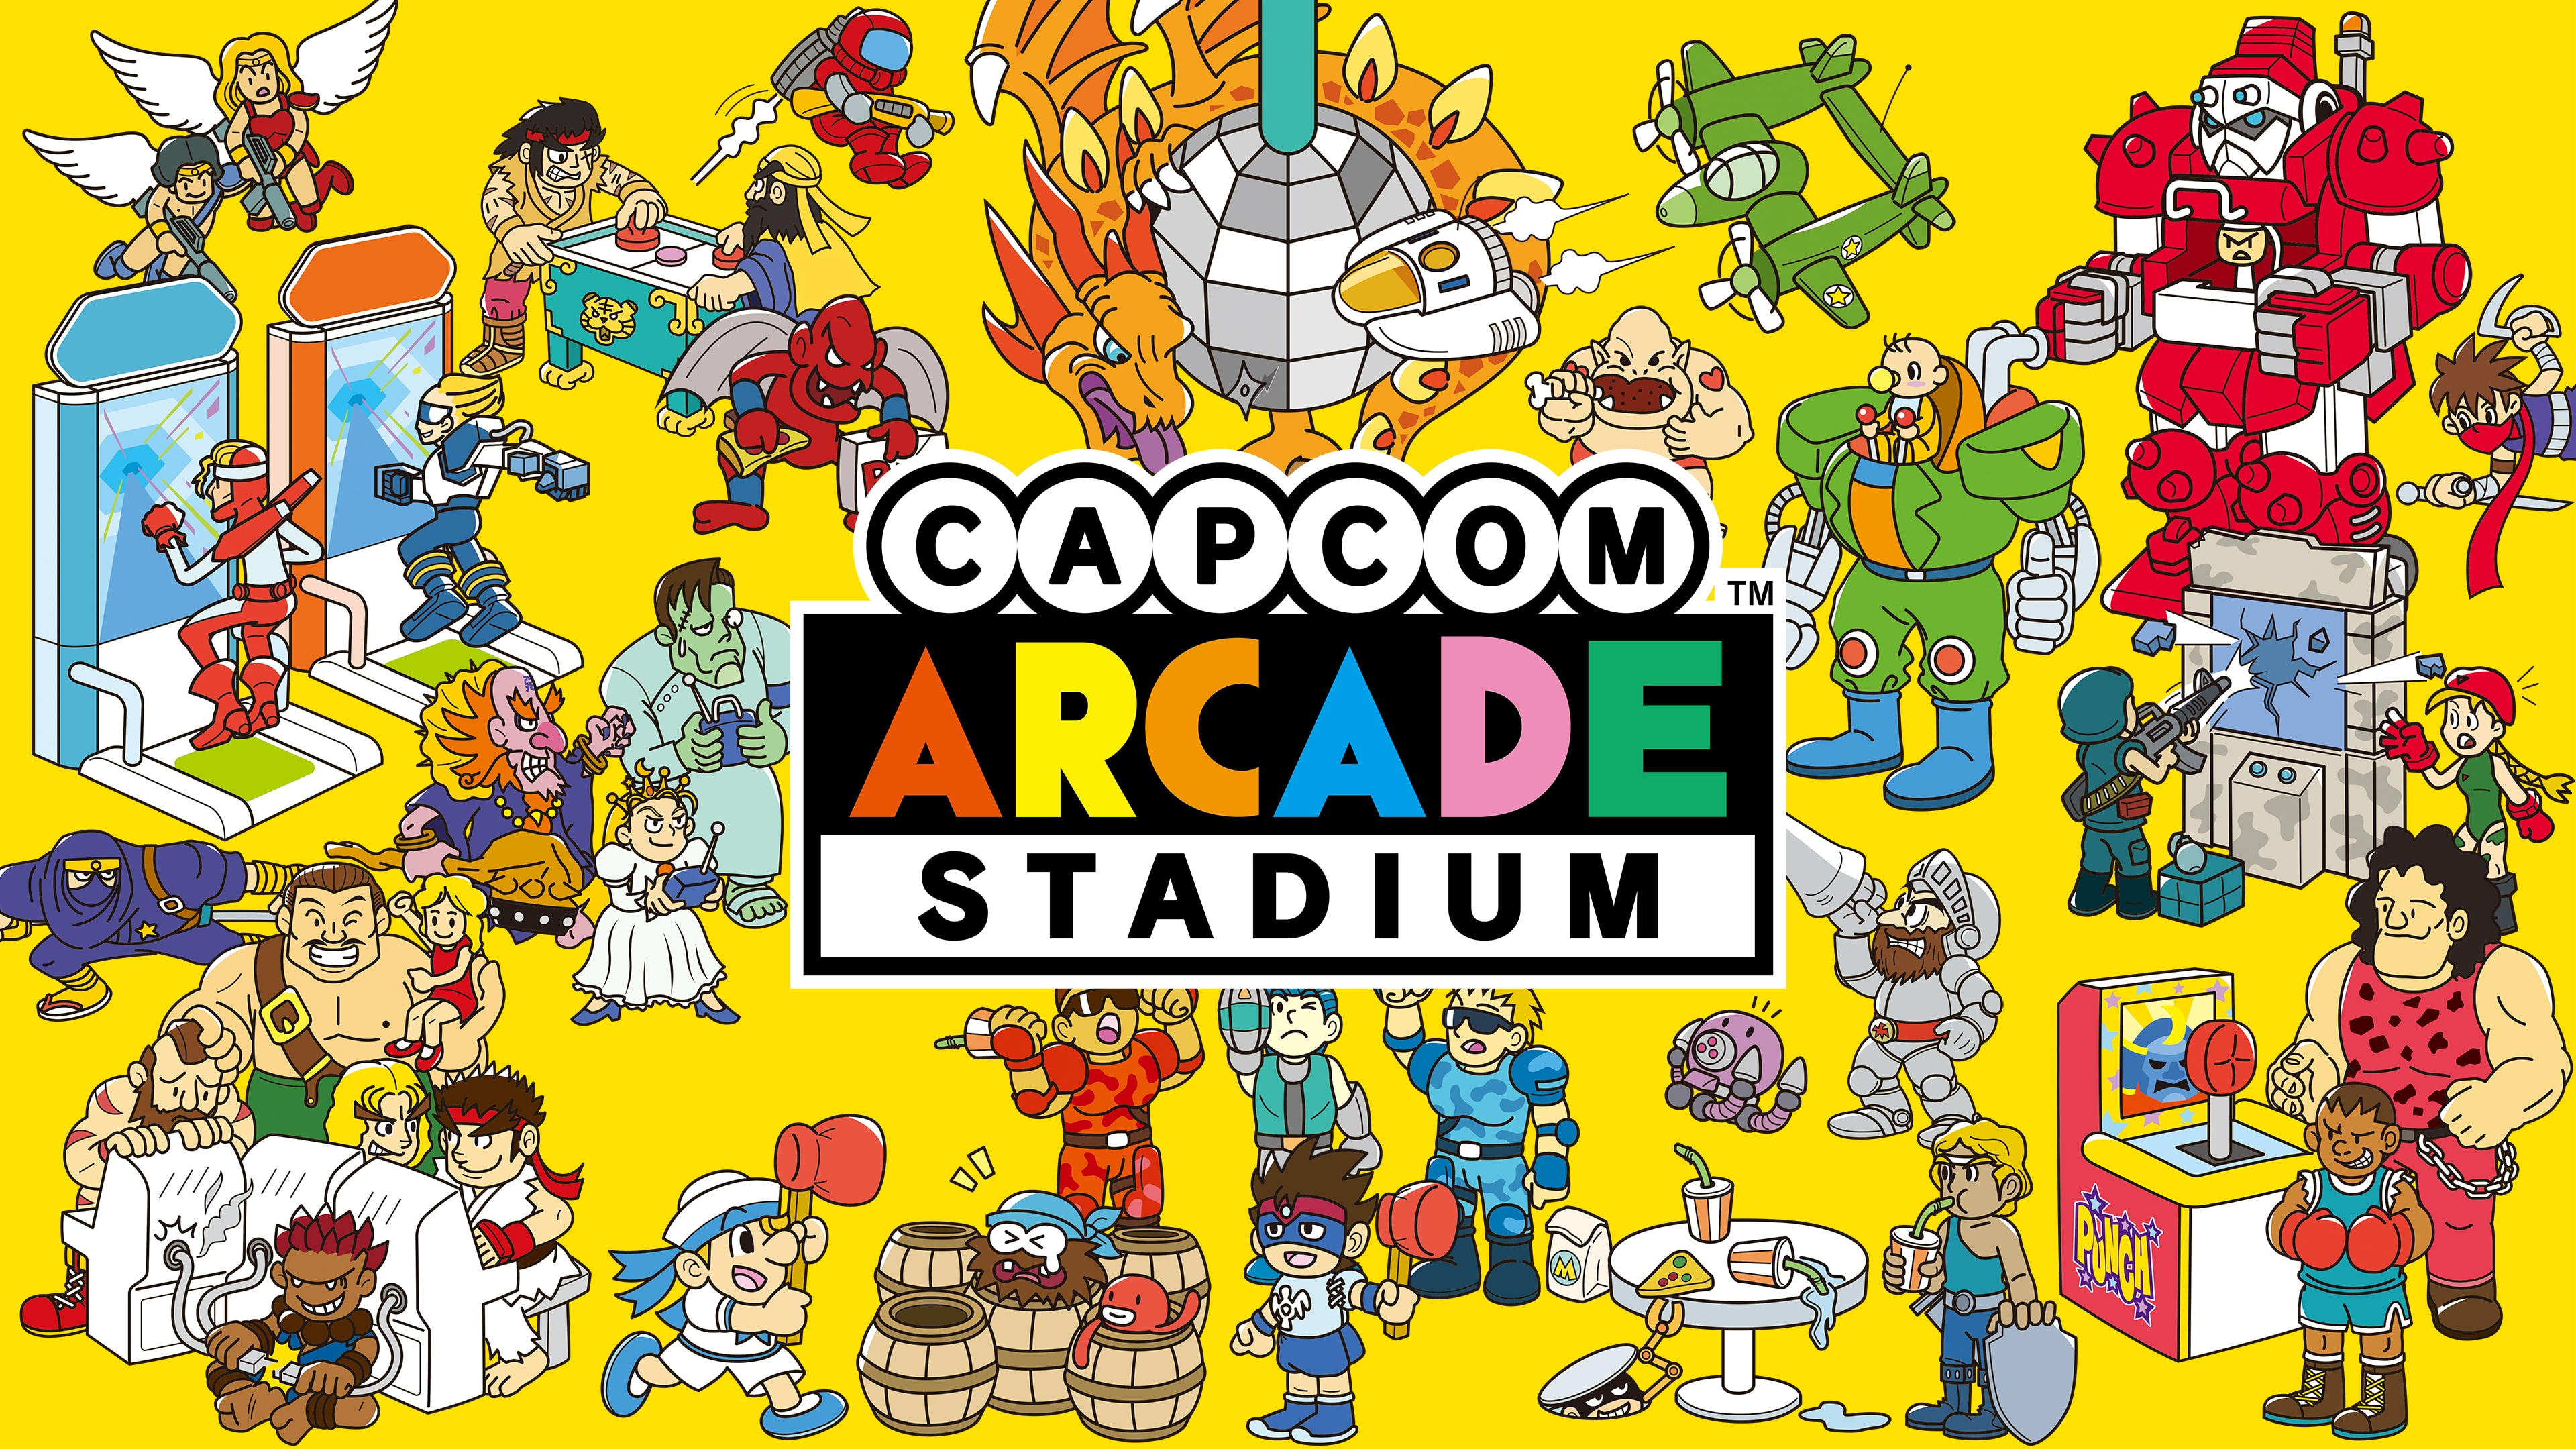 Capcom Arcade Stadium (簡體中文, 韓文, 英文, 泰文, 繁體中文, 日文)